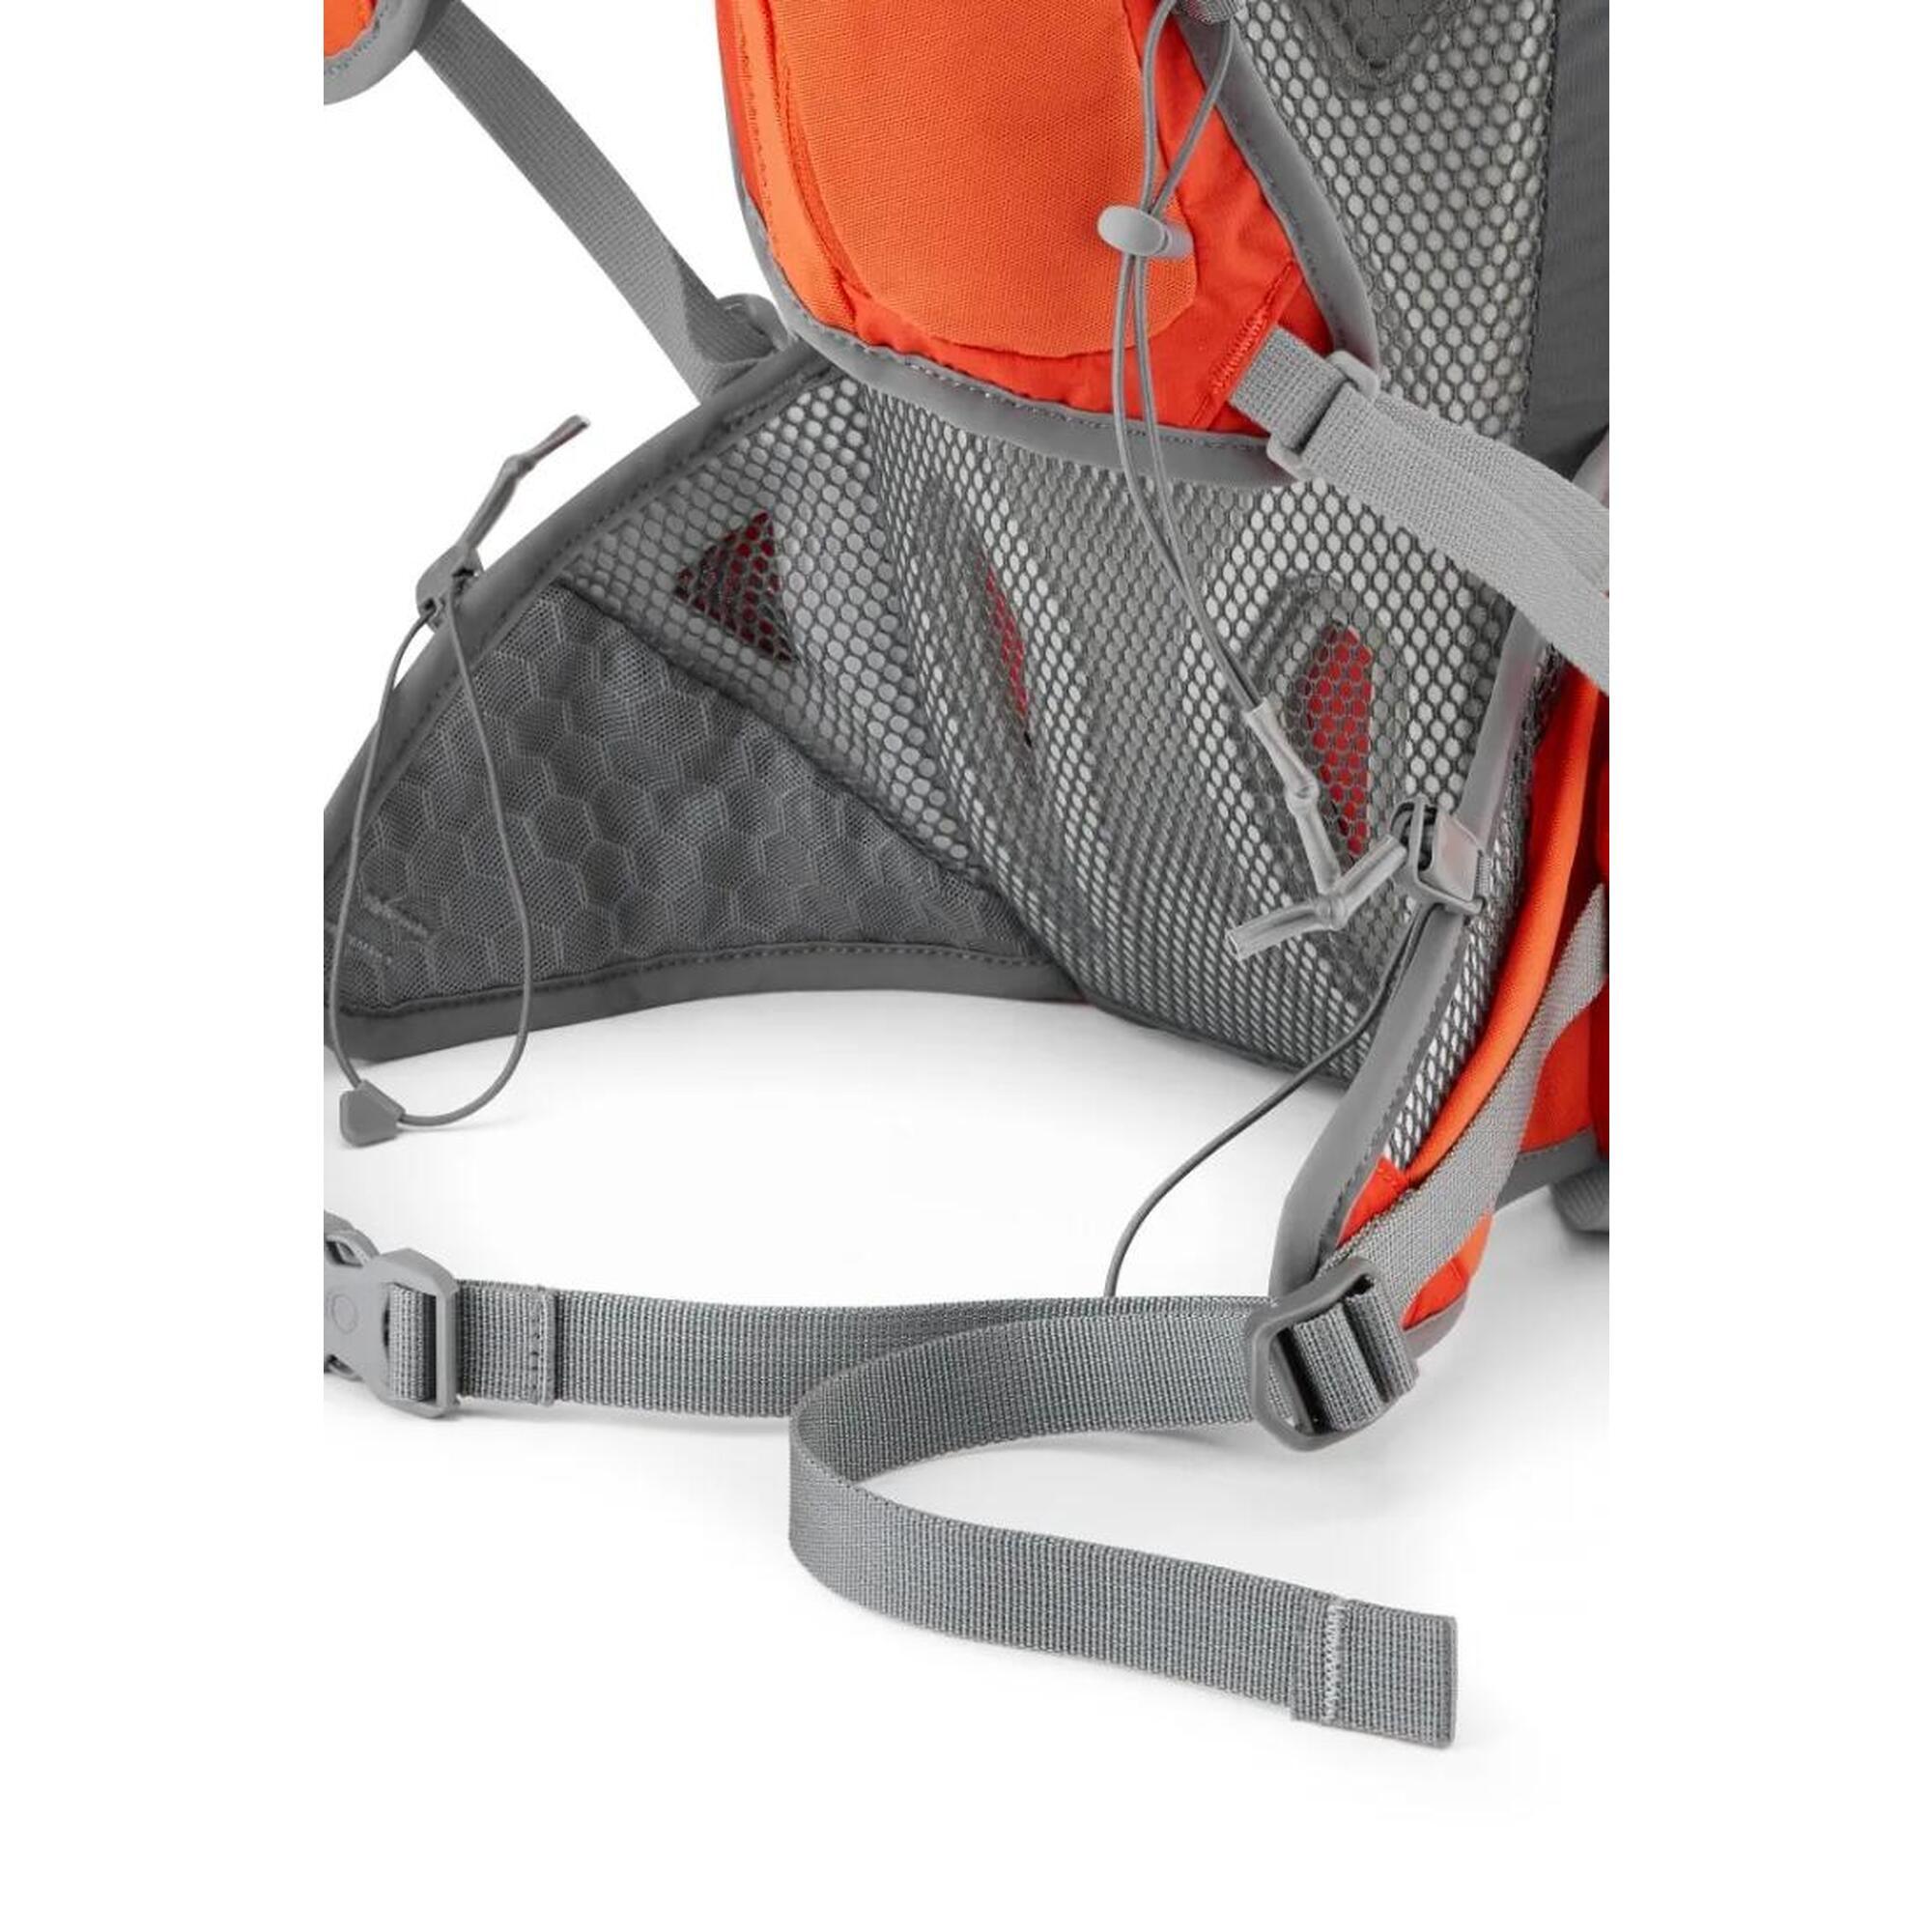 Aeon Ultra Lightweight Hiking Backpack 20L - Orange